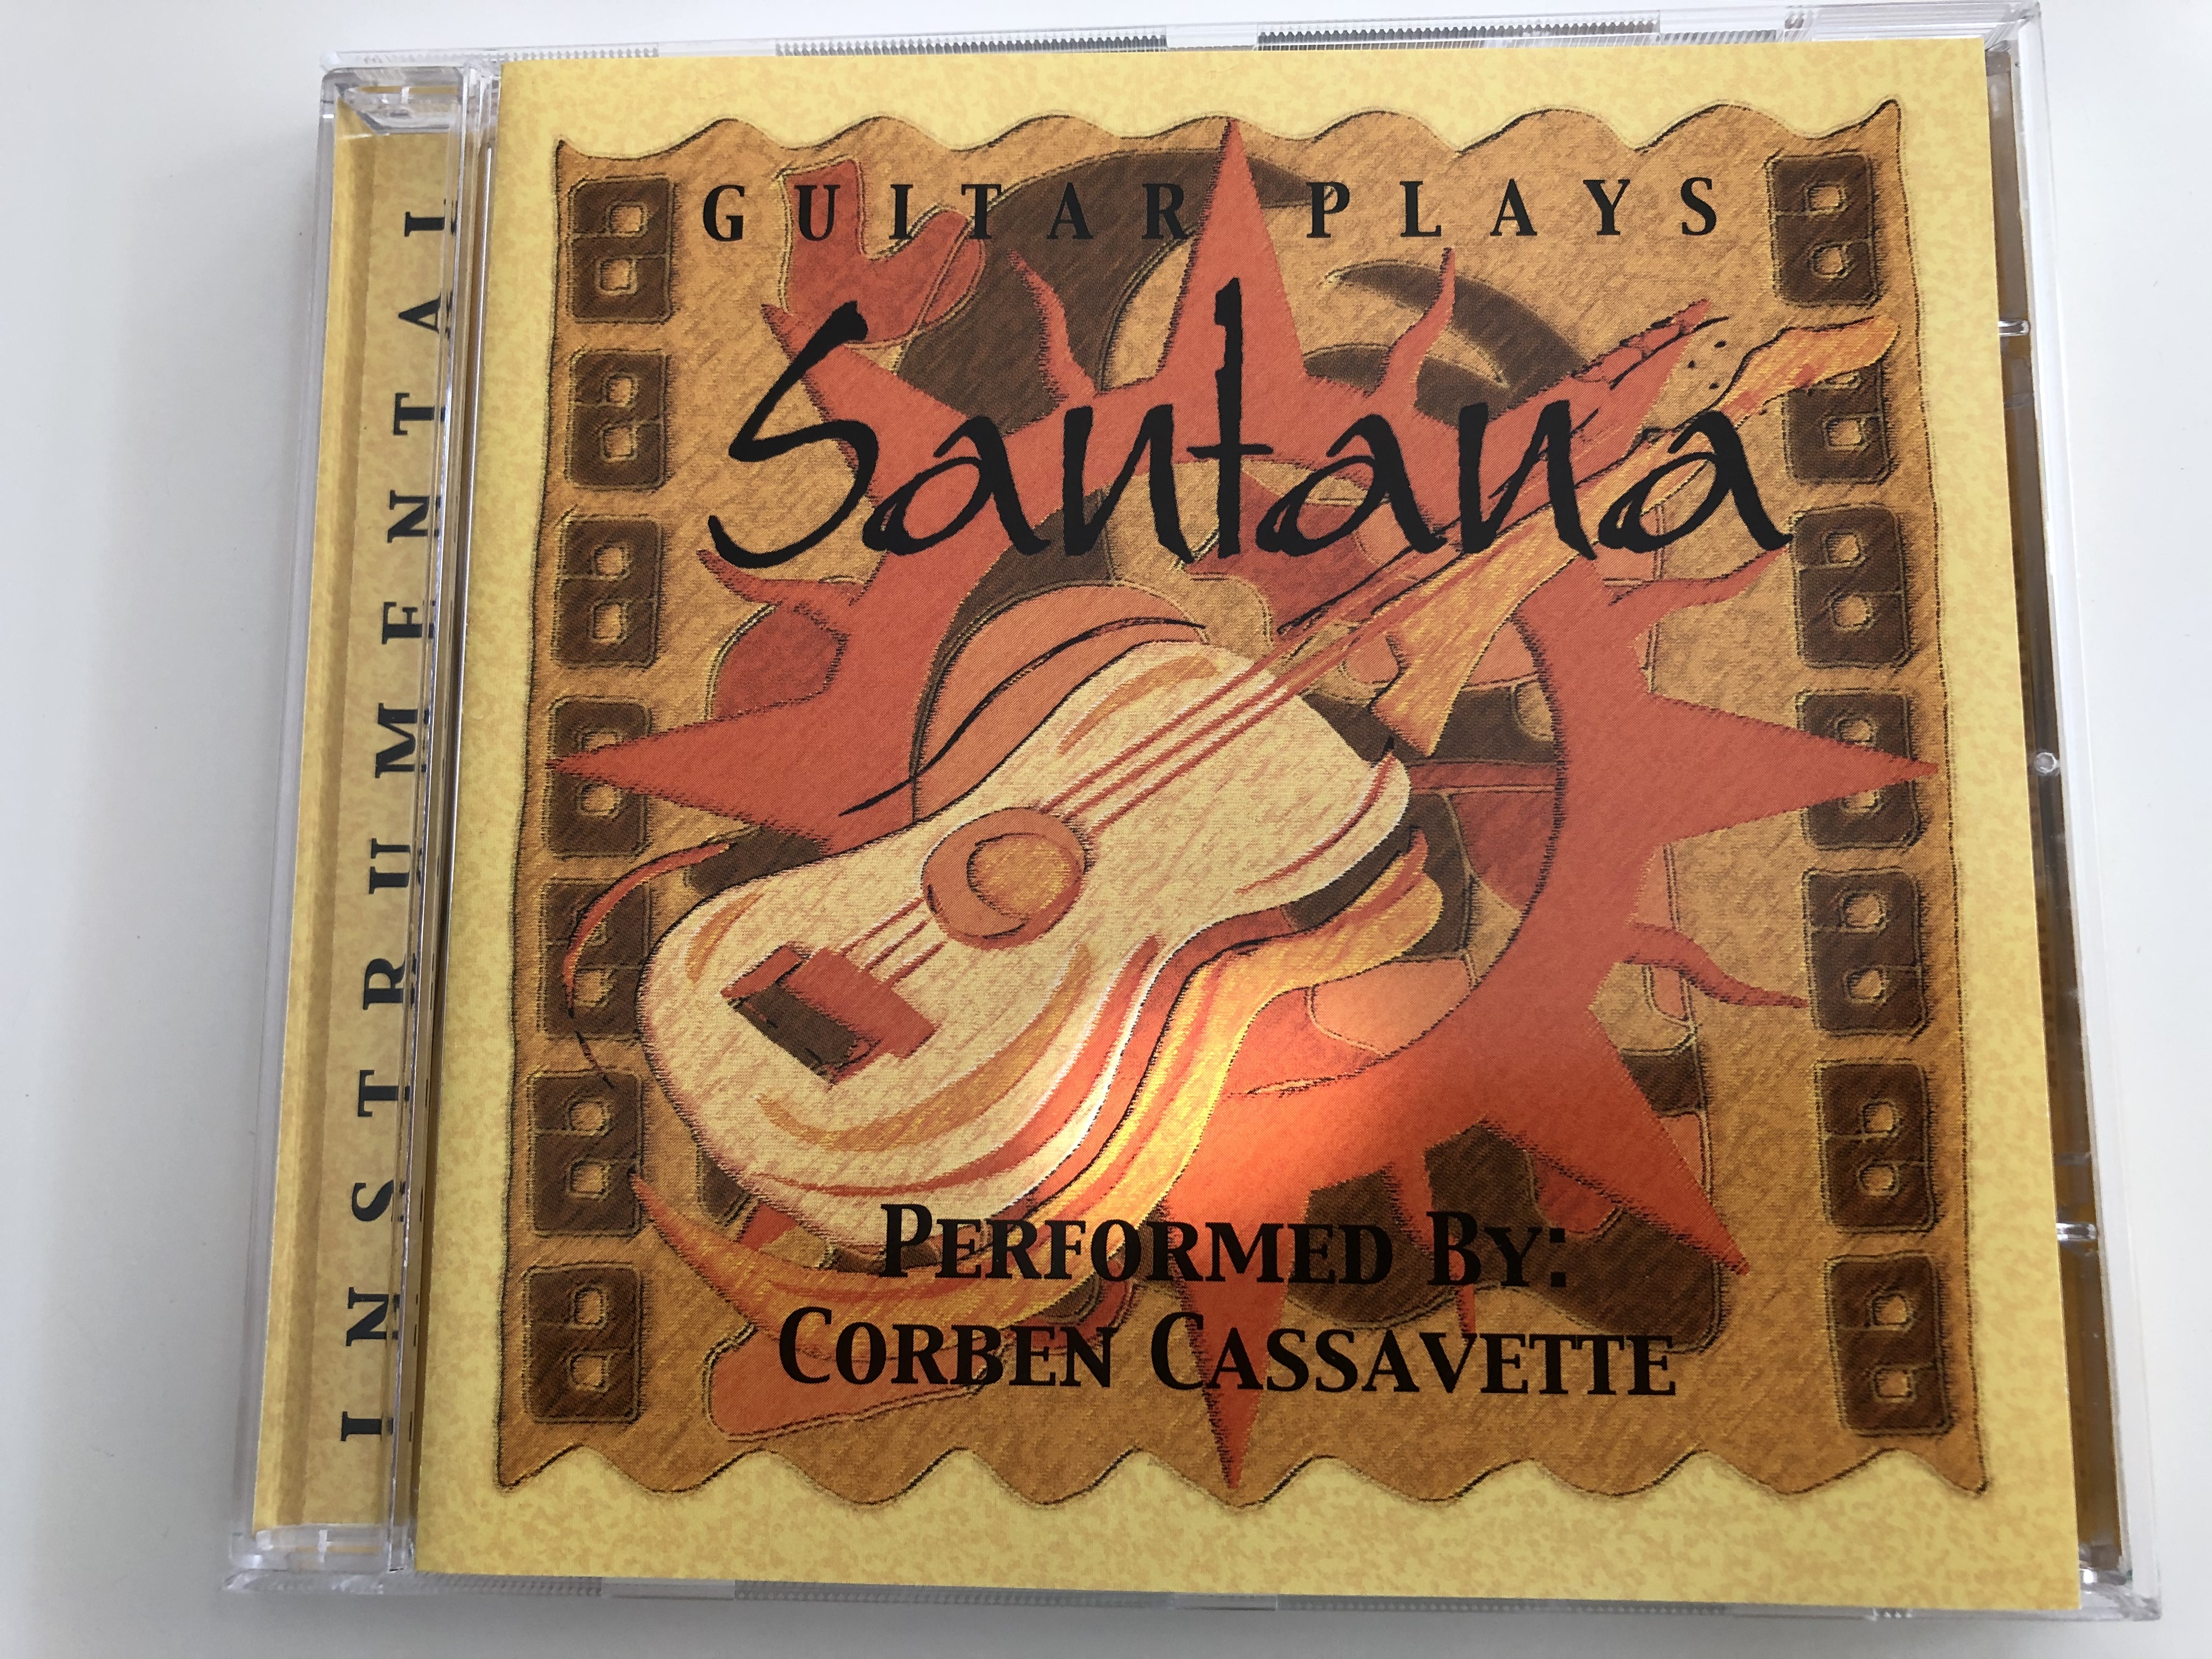 guitar-plays-santana-performed-by-corben-cassavette-instrumental-elap-music-audio-cd-2000-50485262-1-.jpg